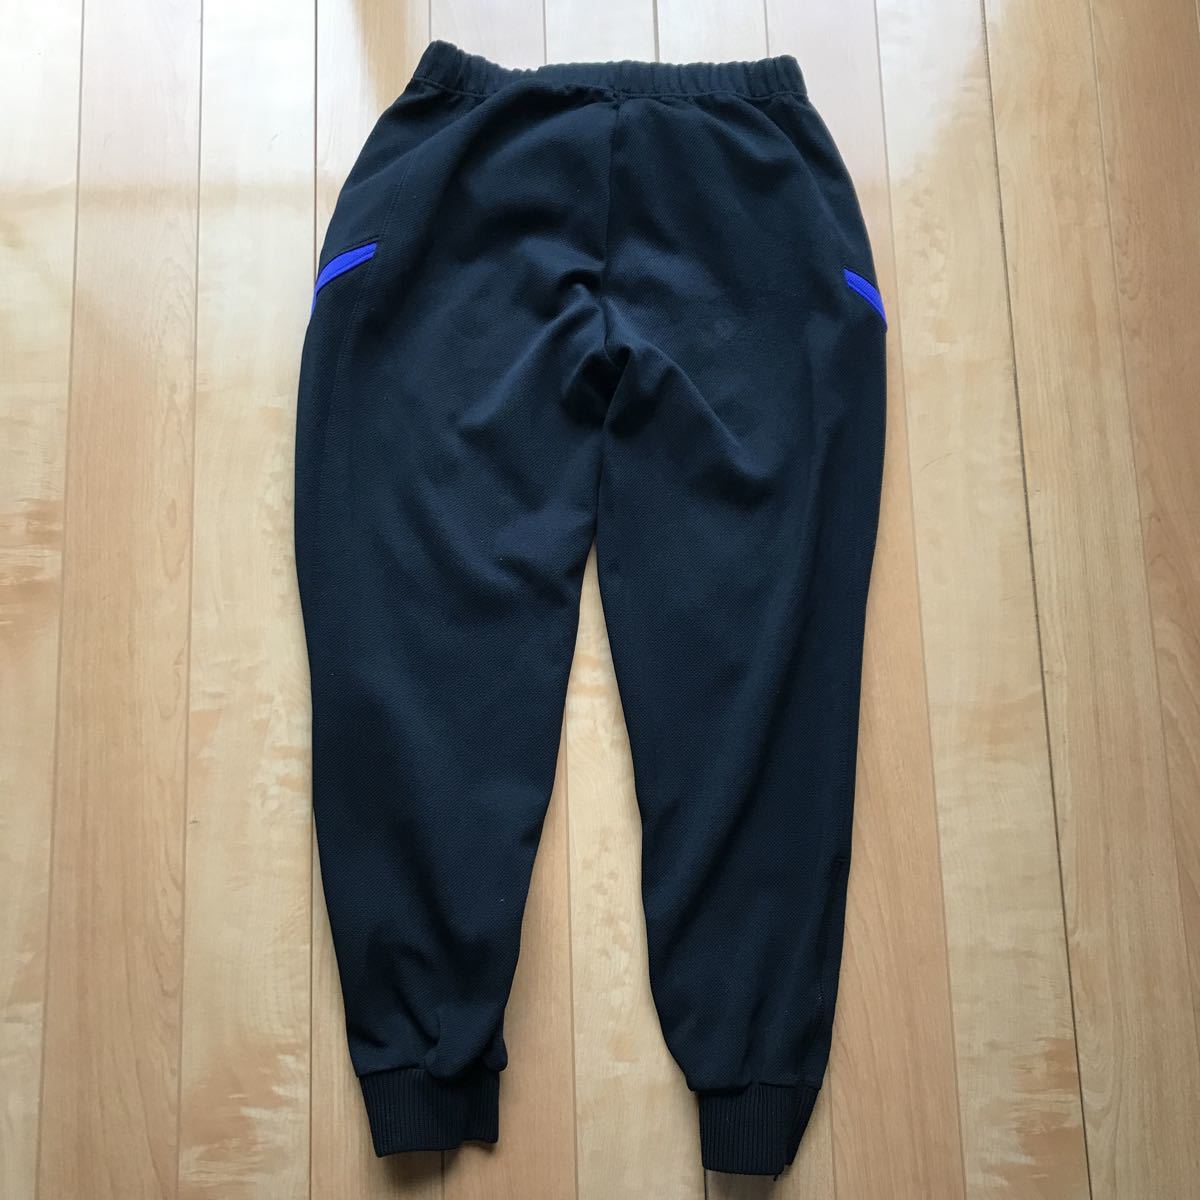 80 period RRR Asics recorder jersey trousers training pants 092-6-26 asics black 